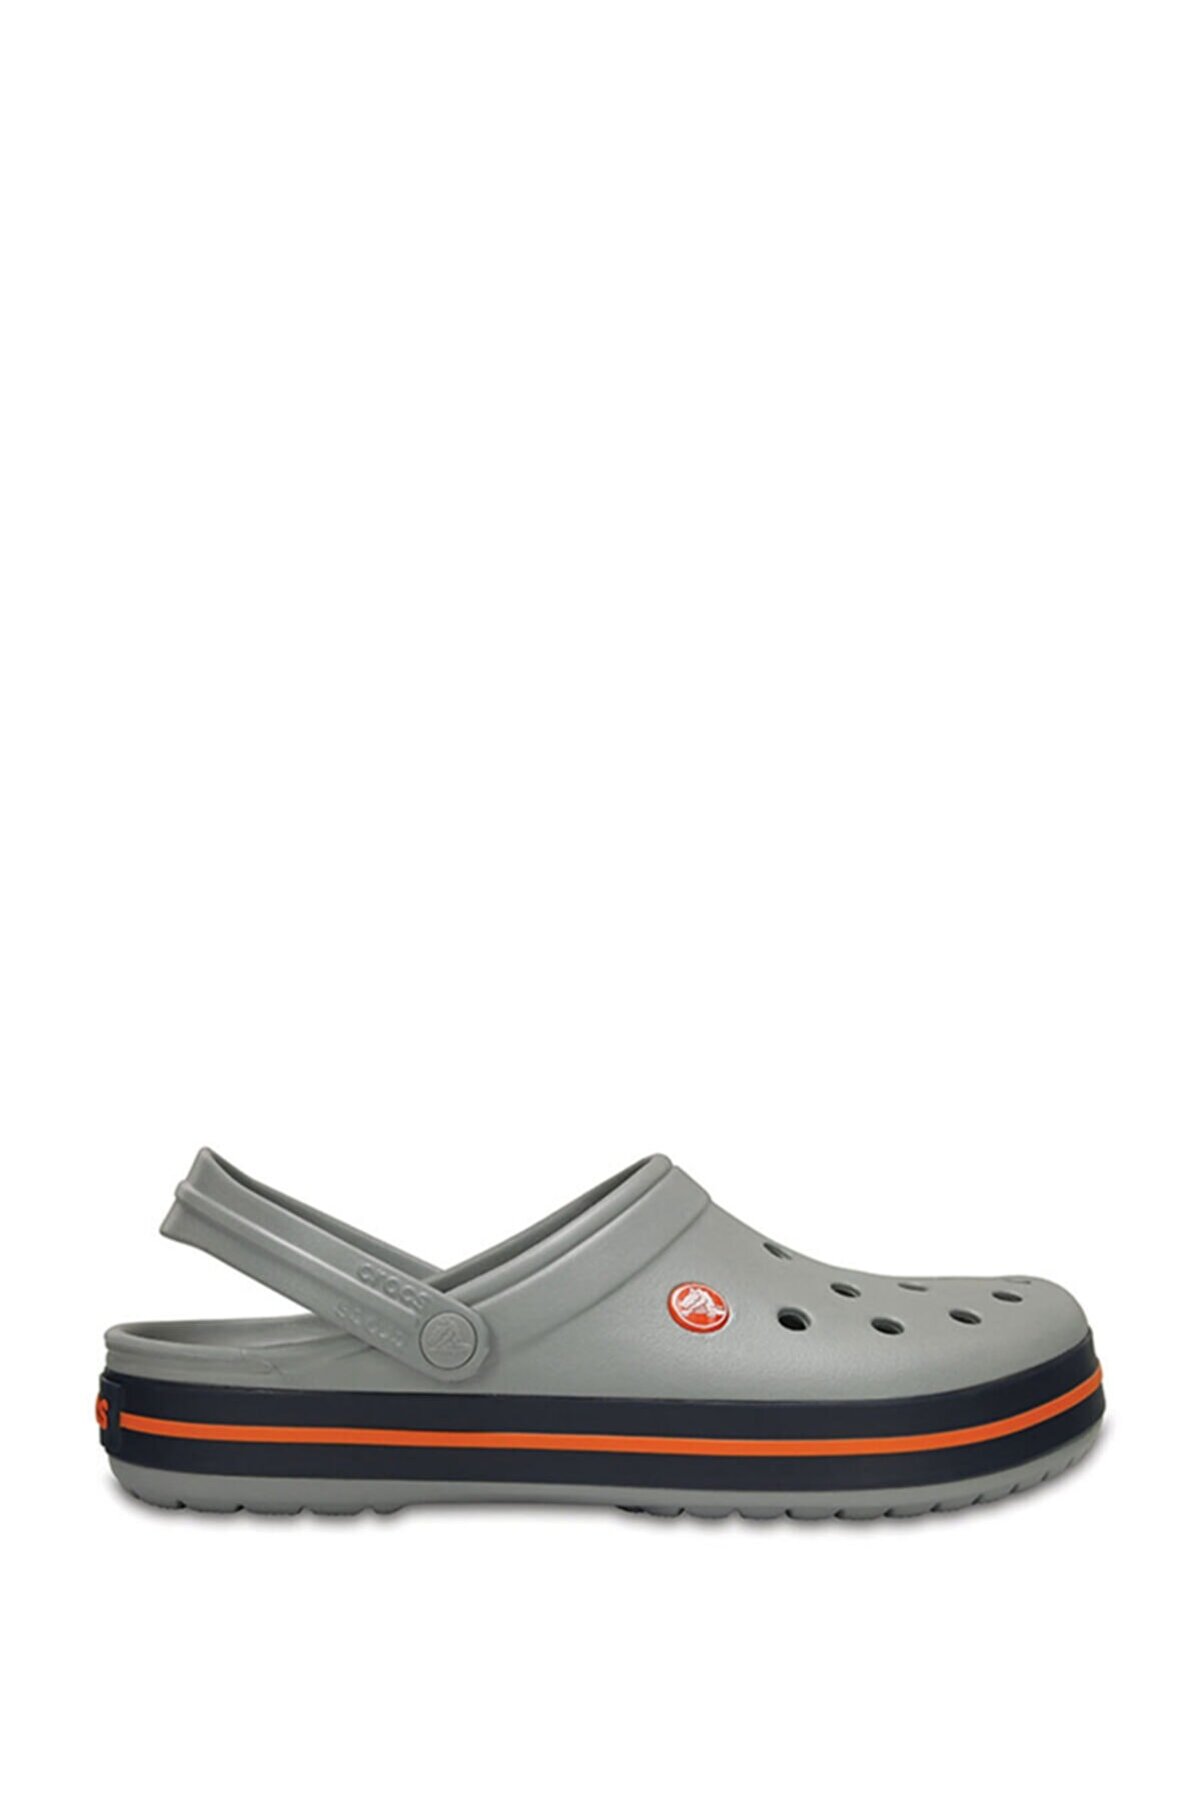 Crocs 11016 Crocband Unisex Sandalet 36-44